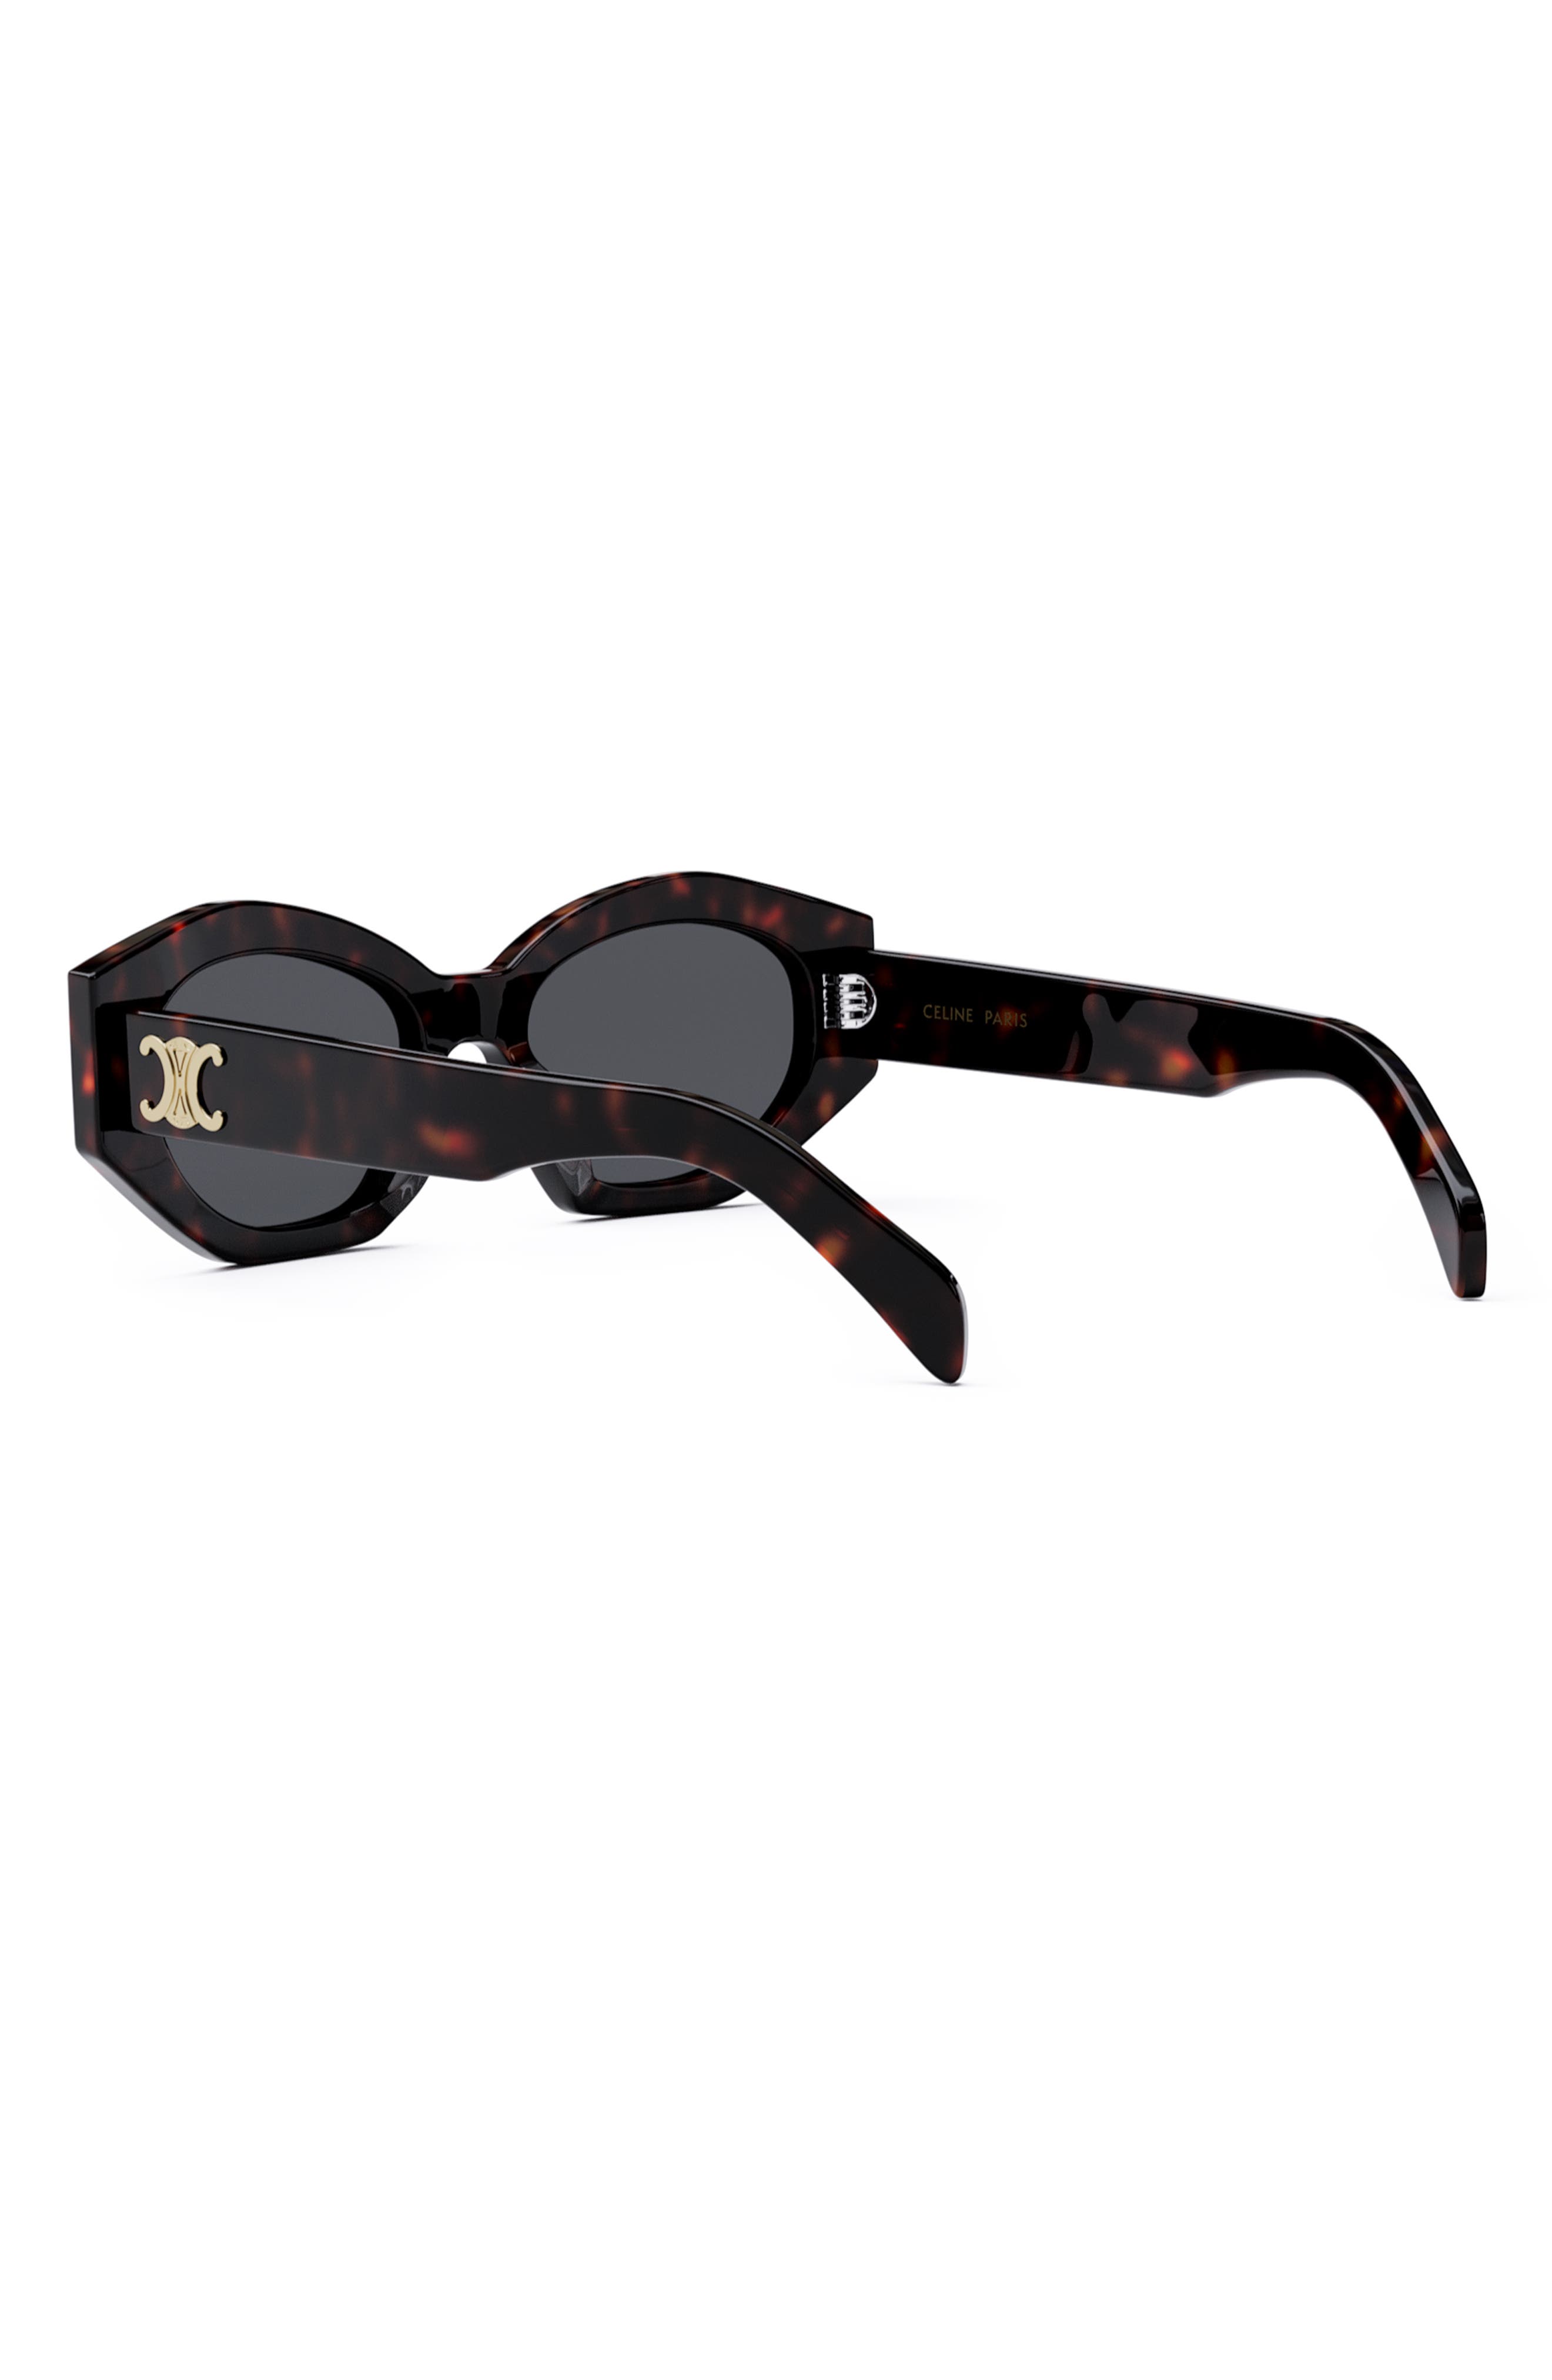 saks fifth avenue chanel sunglasses